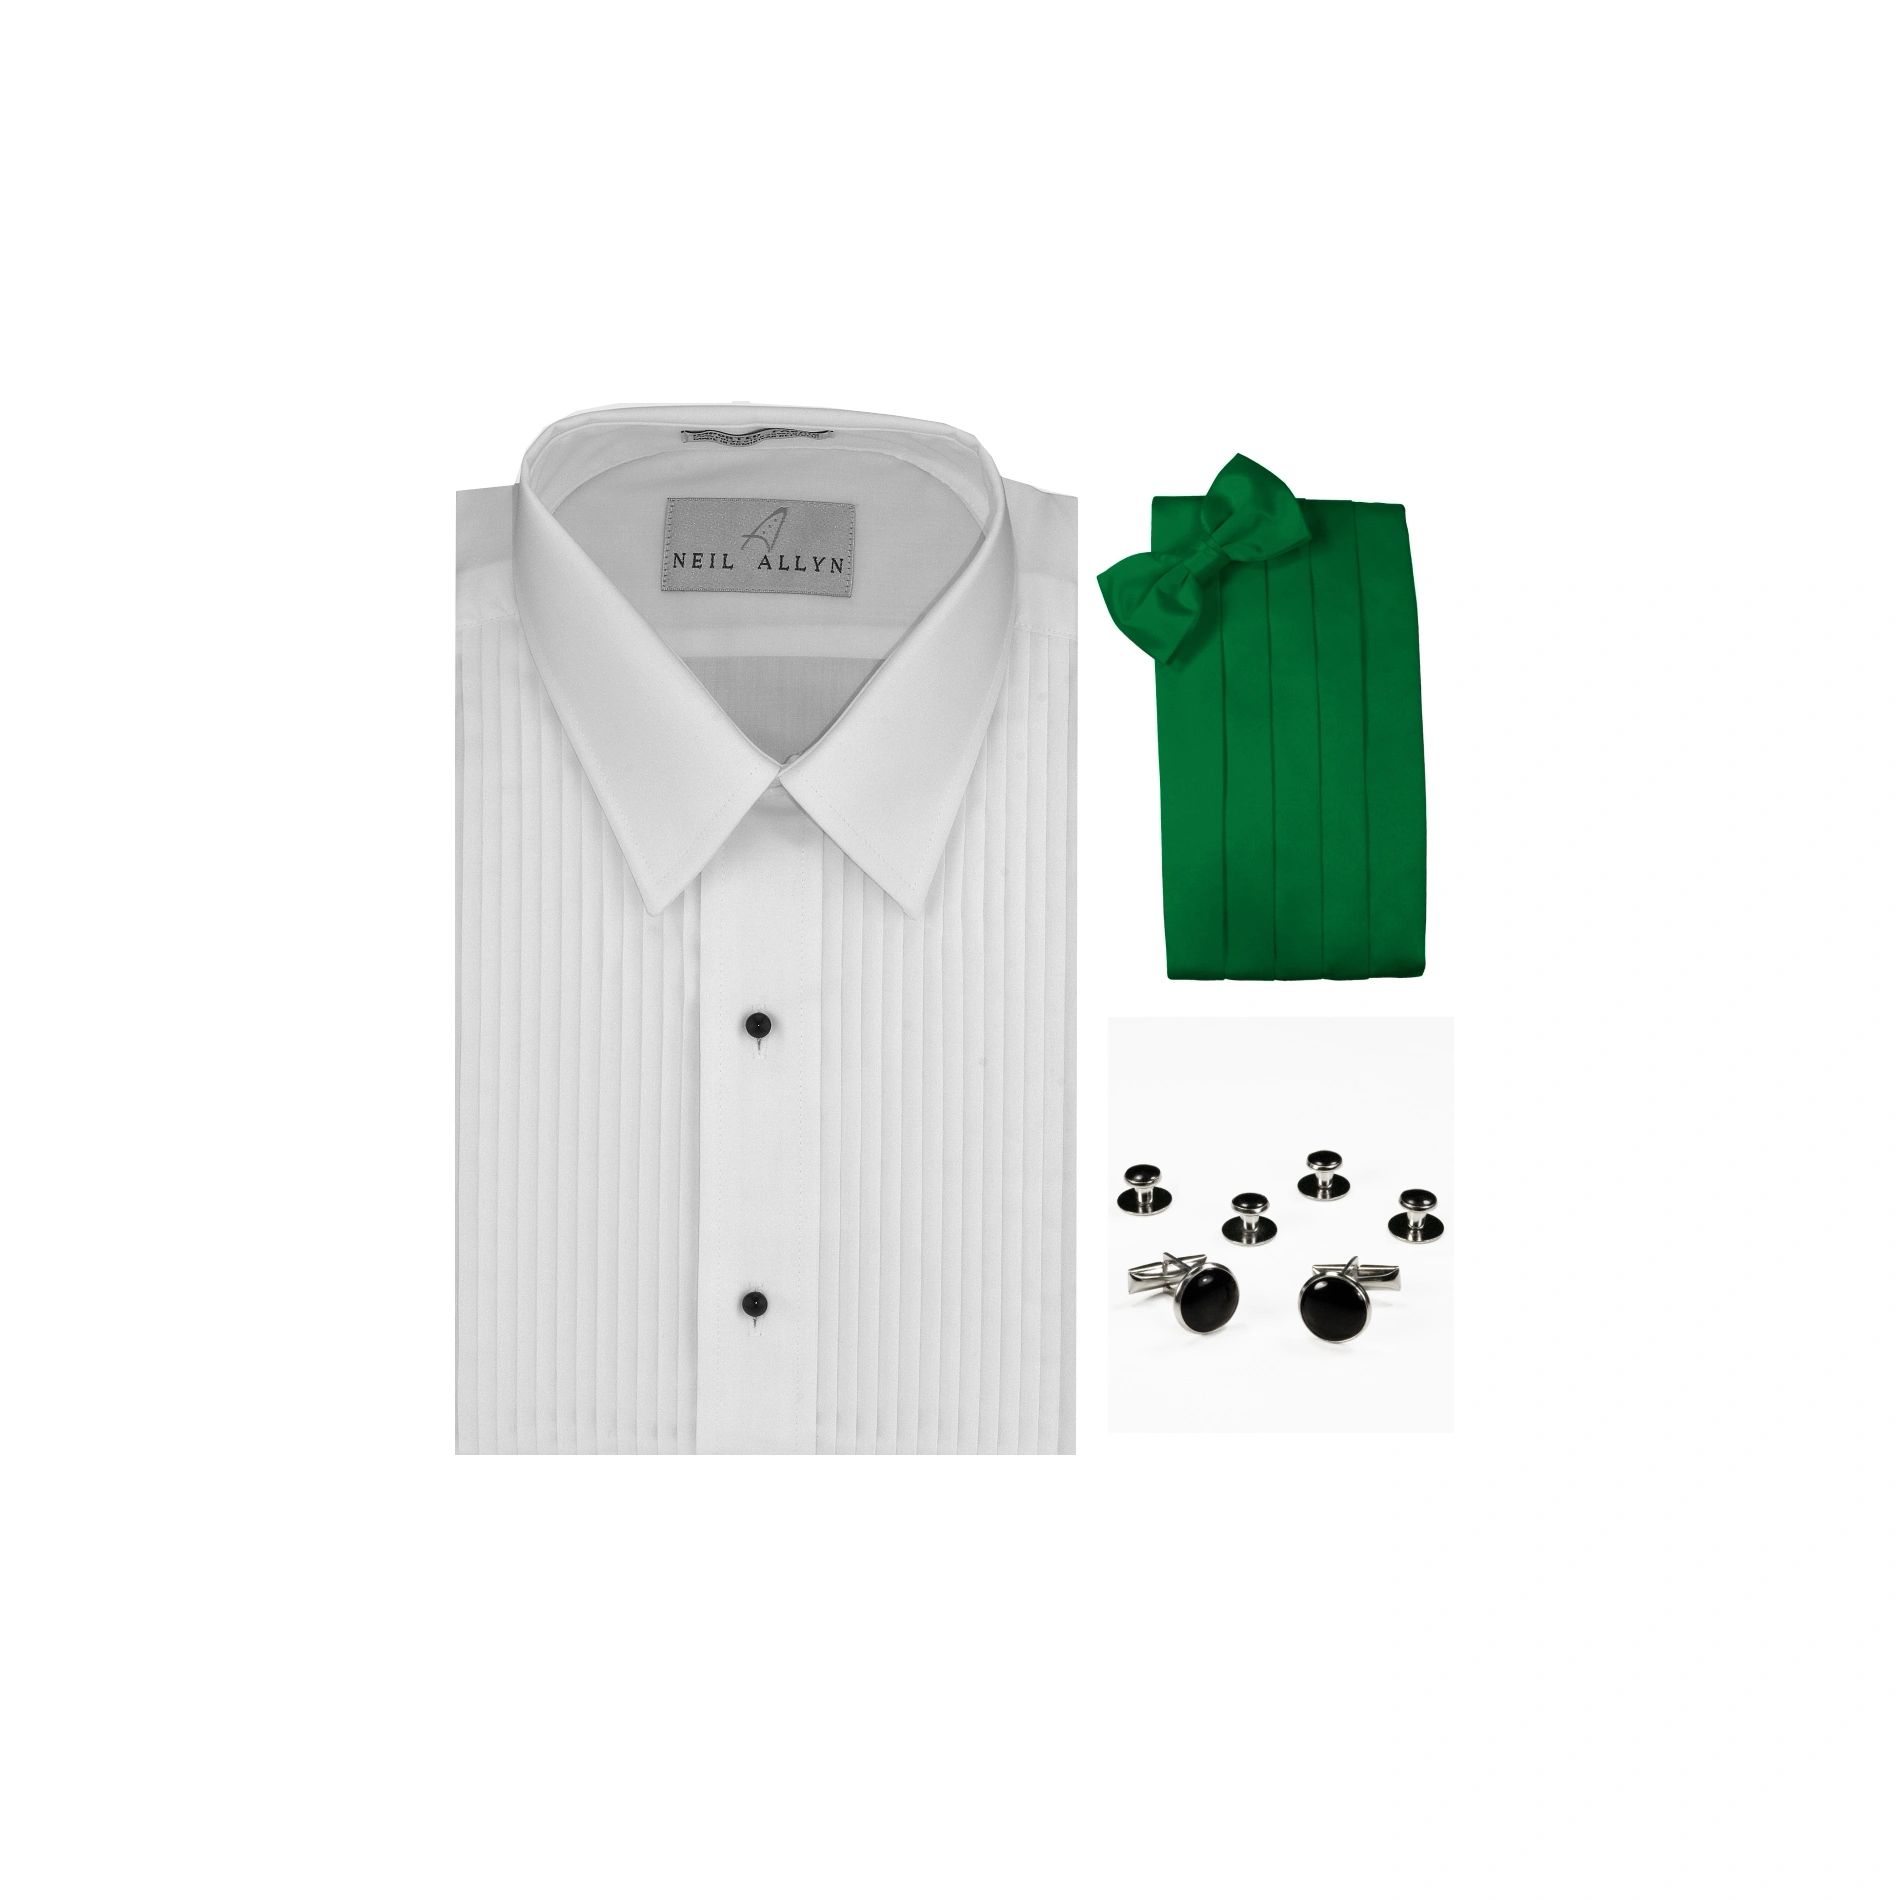 Neil Allyn Lay-Down Collar 1/4" Pleats Formal Tuxedo Shirt, Kelly Green Cummerbund, Bow-Tie, Cuff Links & Studs Set